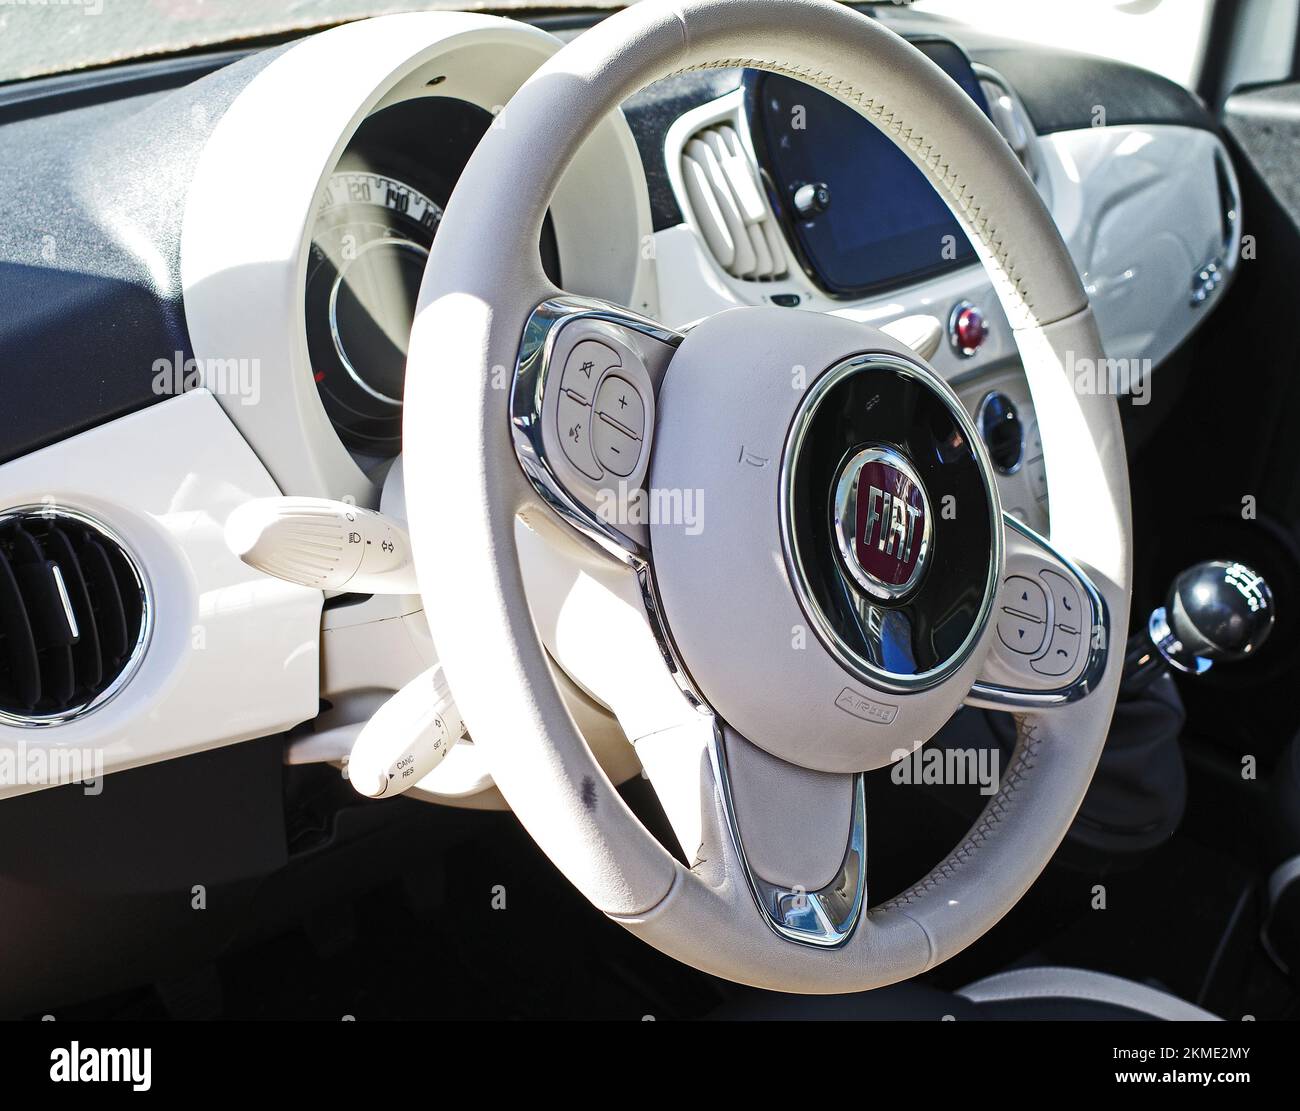 Fiat 500 lenkrad -Fotos und -Bildmaterial in hoher Auflösung – Alamy